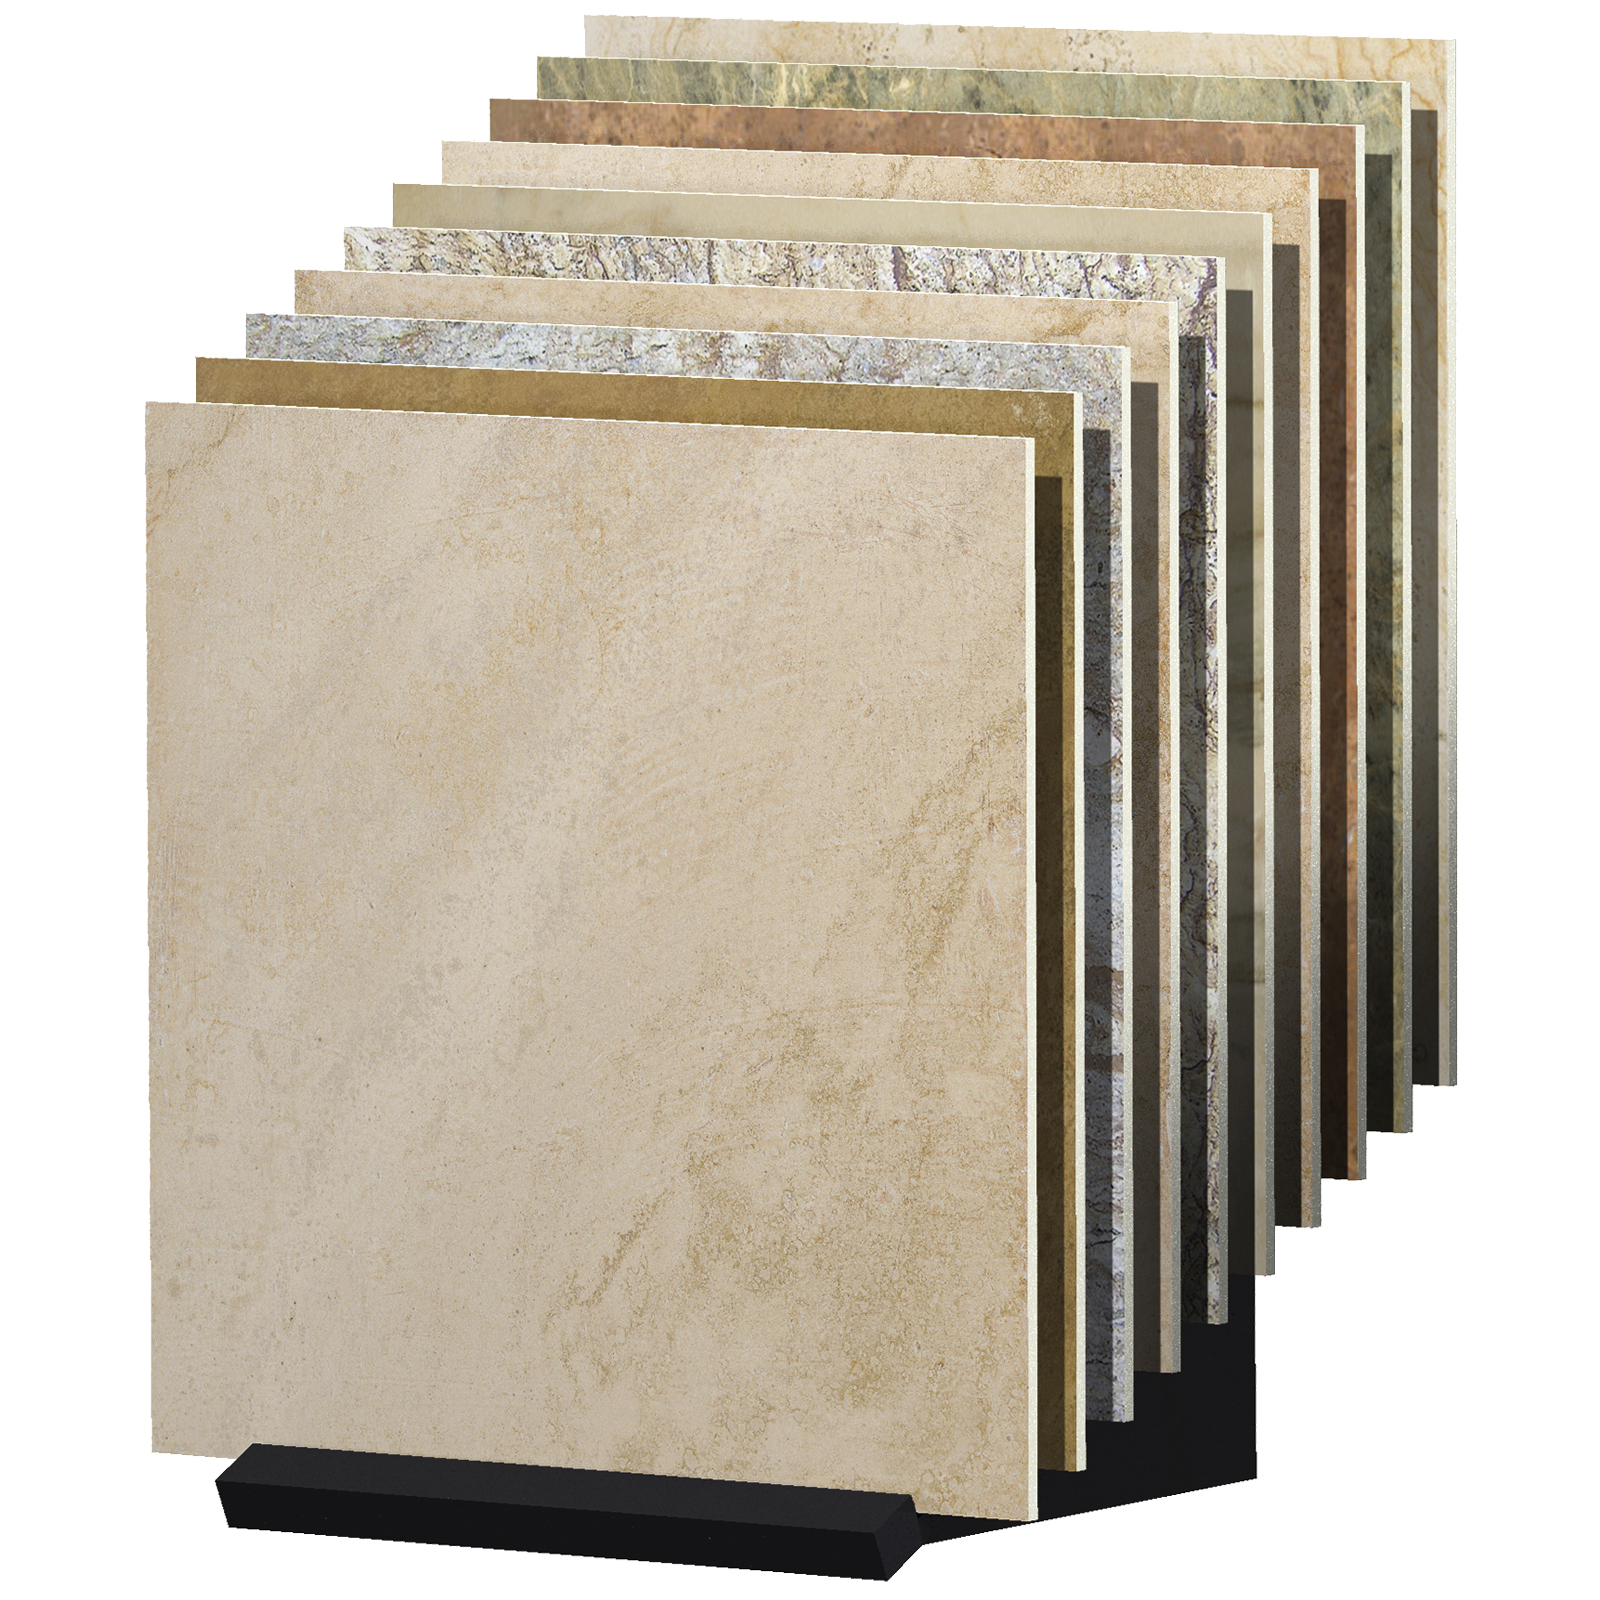 WB01 Wedge Stock Display Countertop Floor for Ceramic Tiles Quartz Stone Hardwood Planks Sample Displays